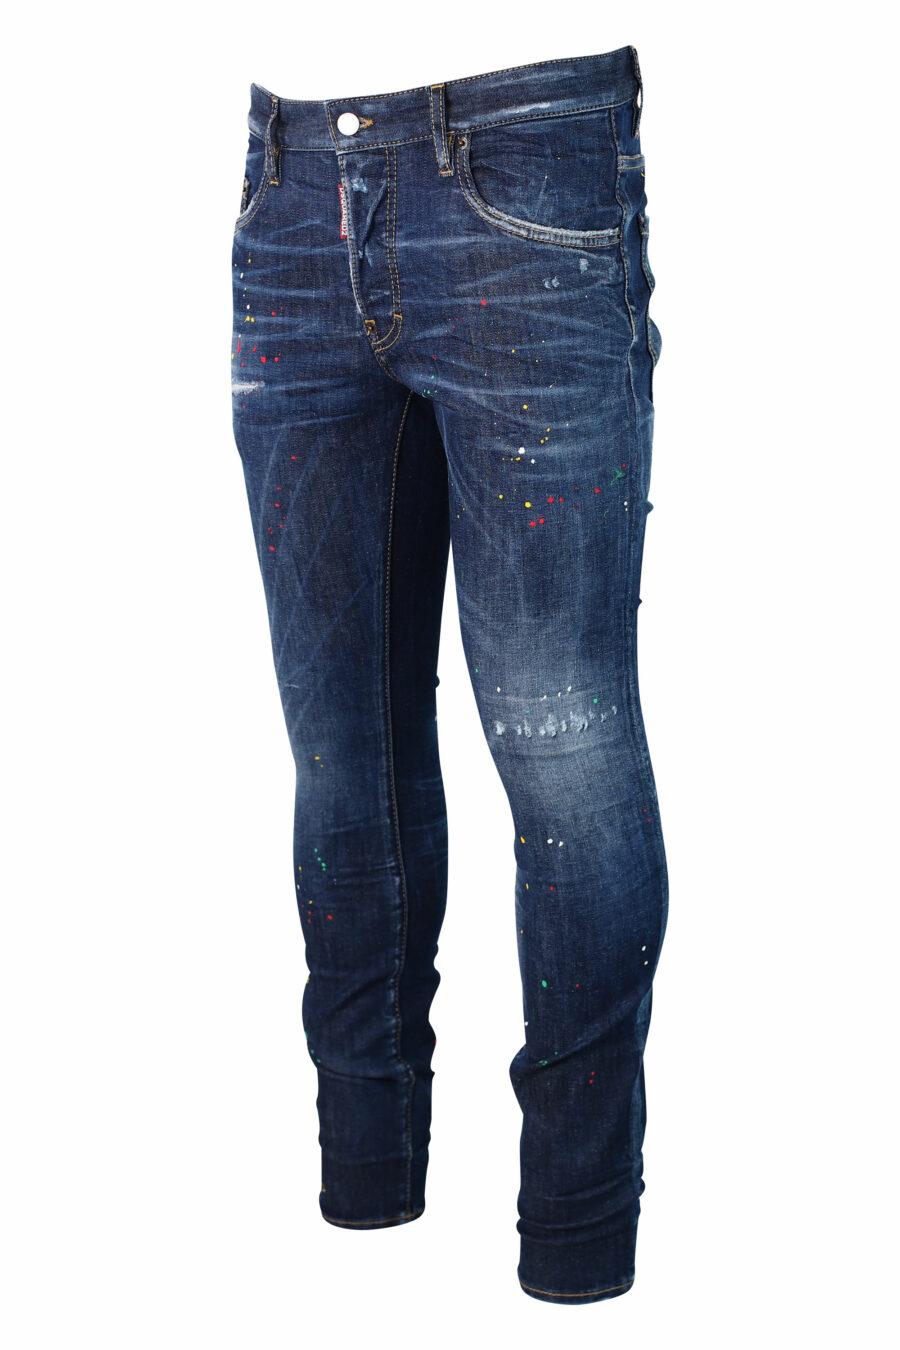 Blue jeans "super twinky jean" worn "bob marley" - IMG 9923